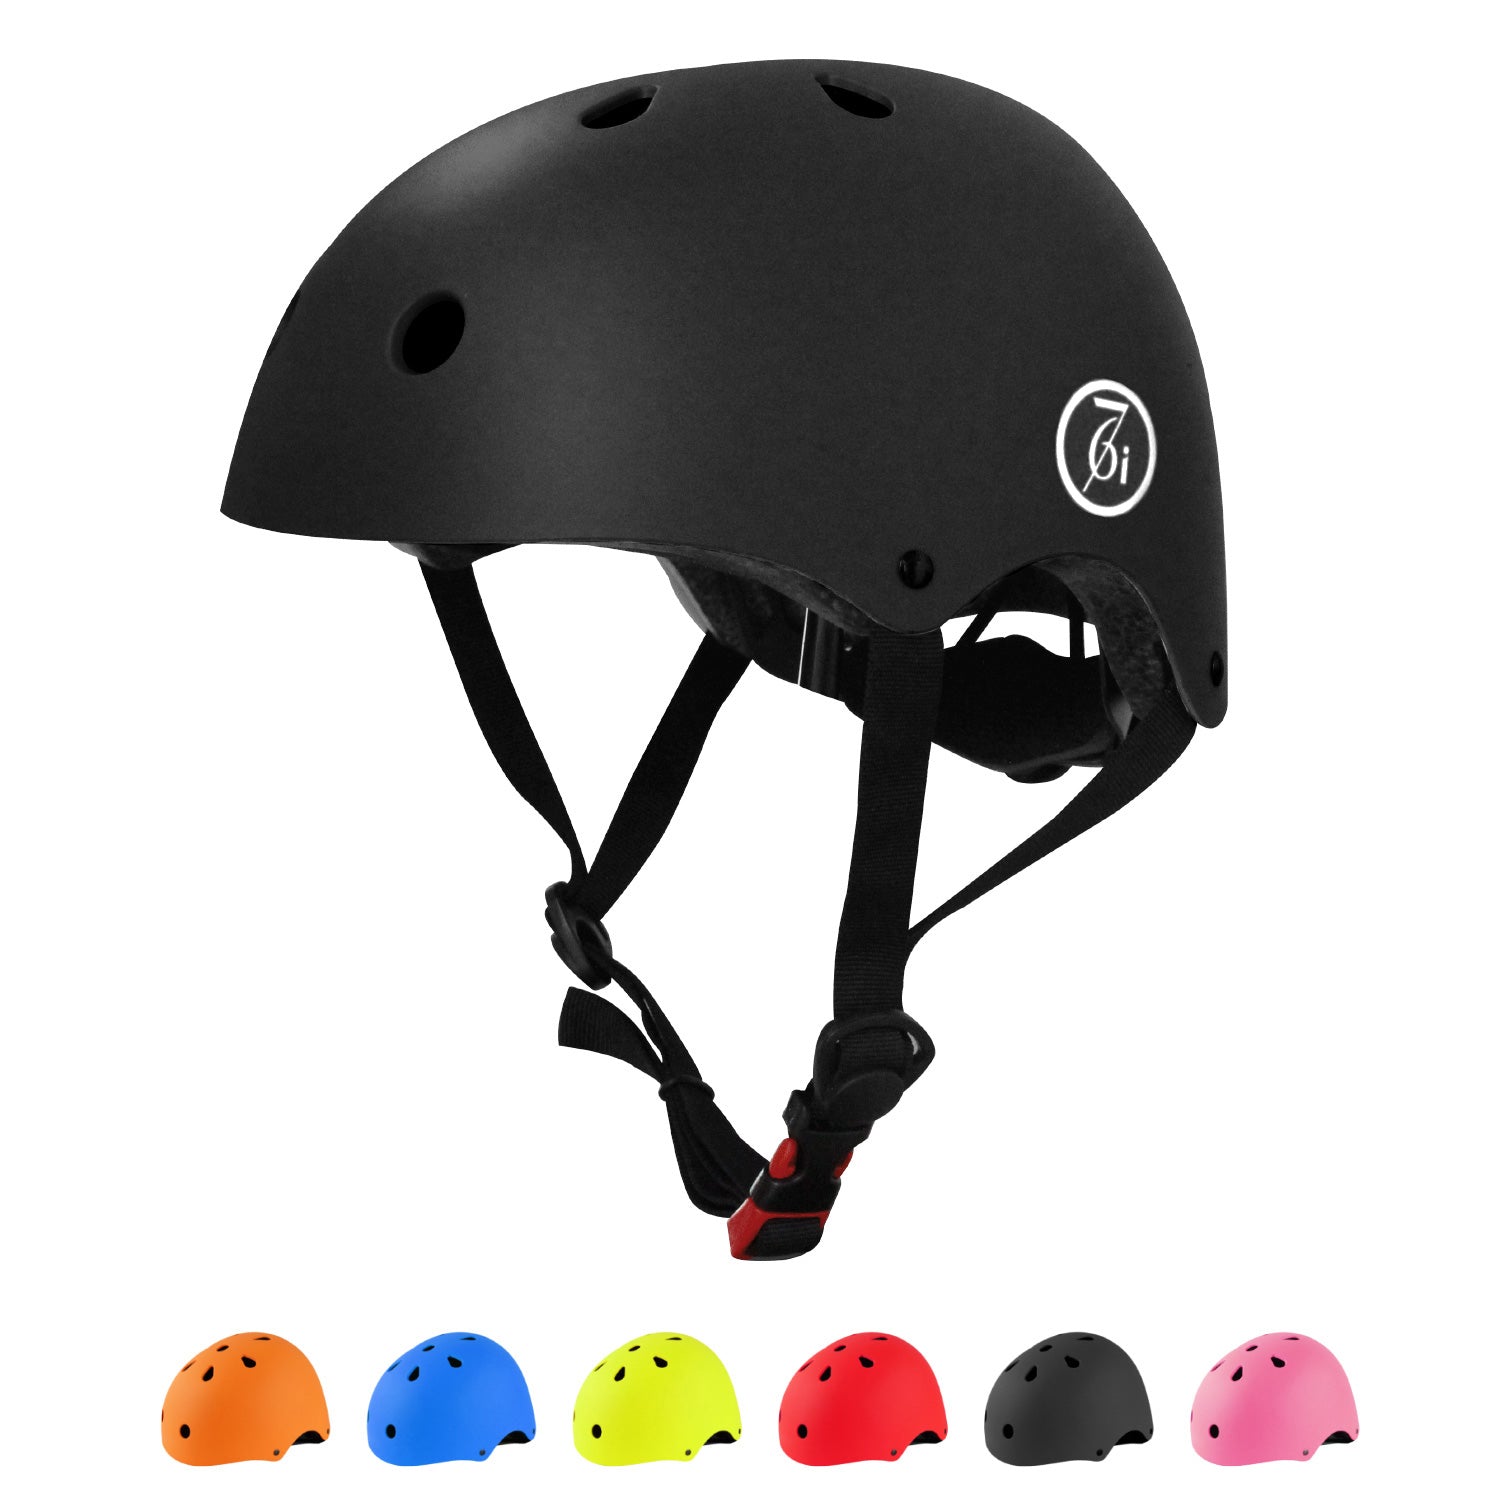 67i Black Adult Helmet In Stock USA